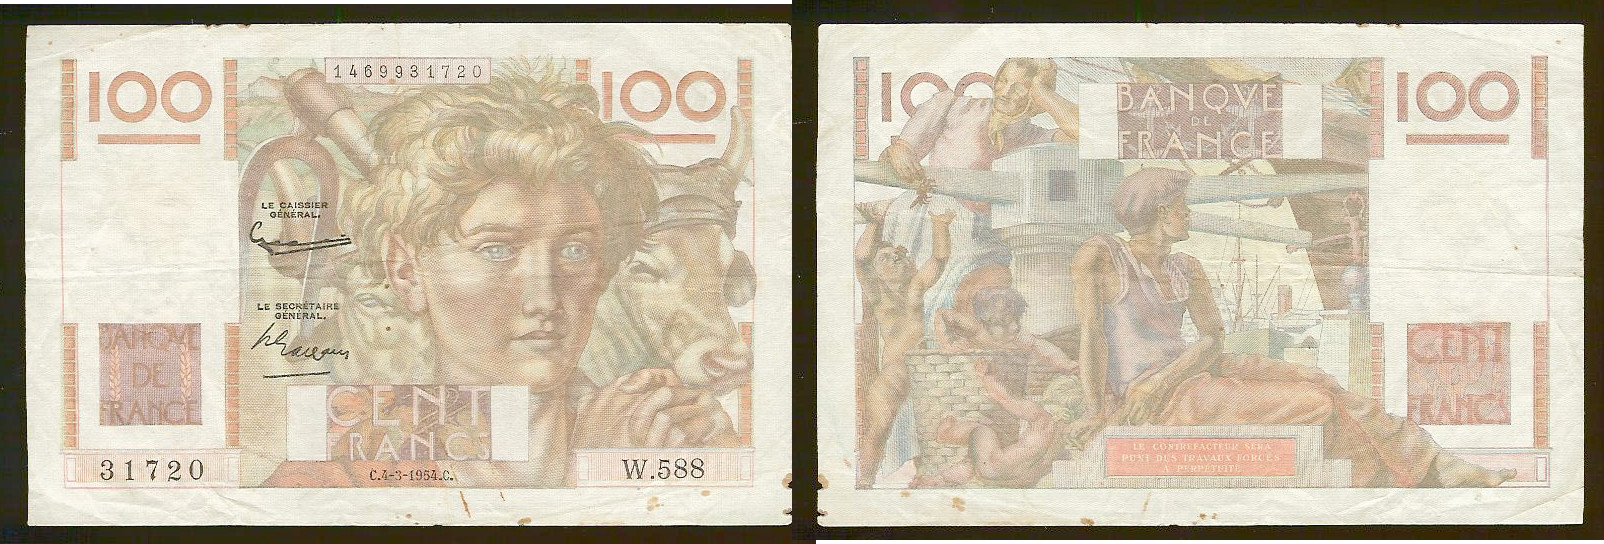 100 francs Young Farmer 1954 reversed watermark aVF